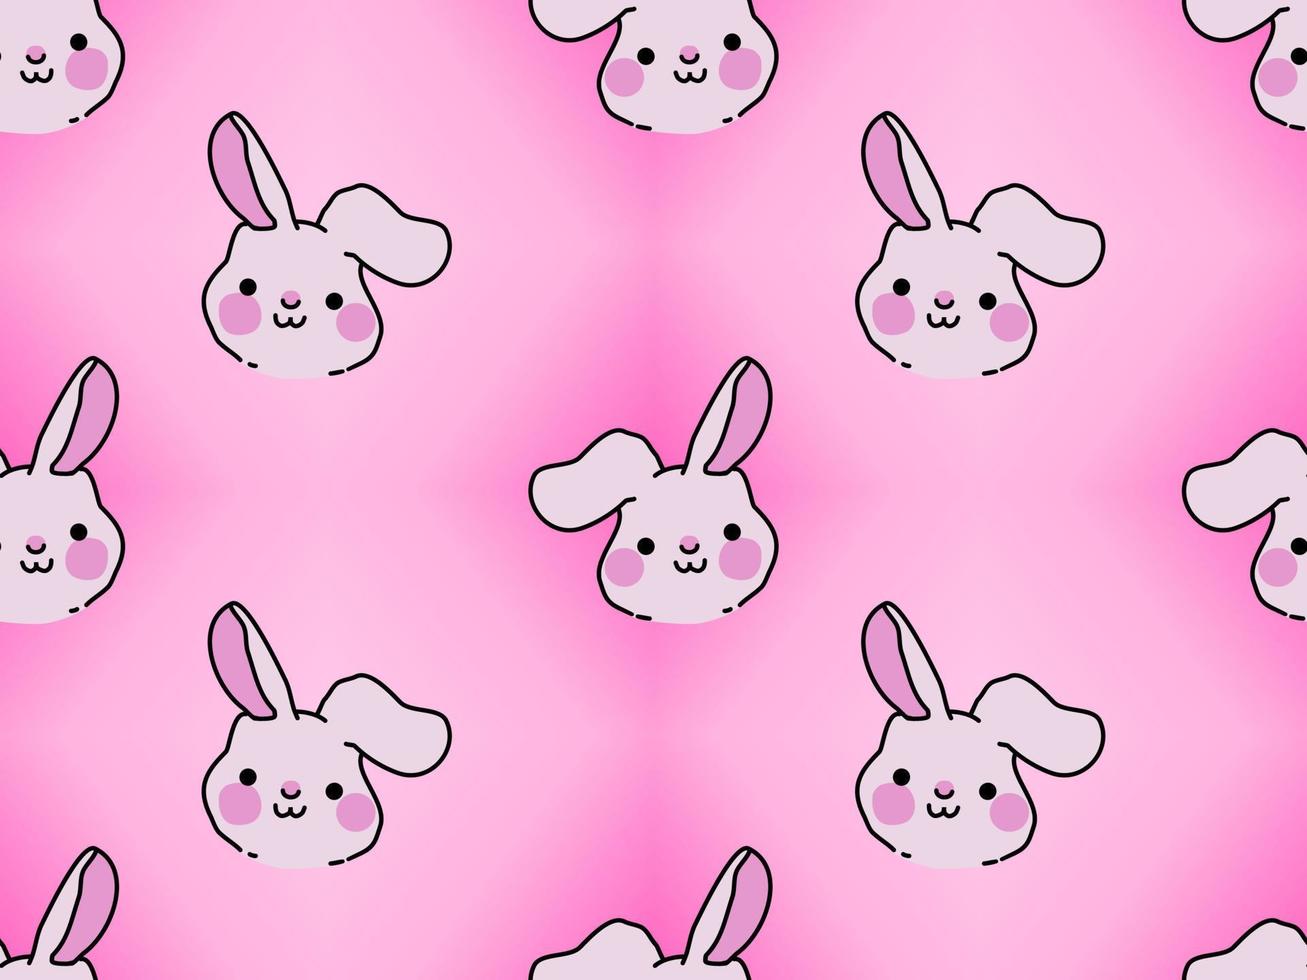 Rabbit cartoon character seamless pattern on pink background vector